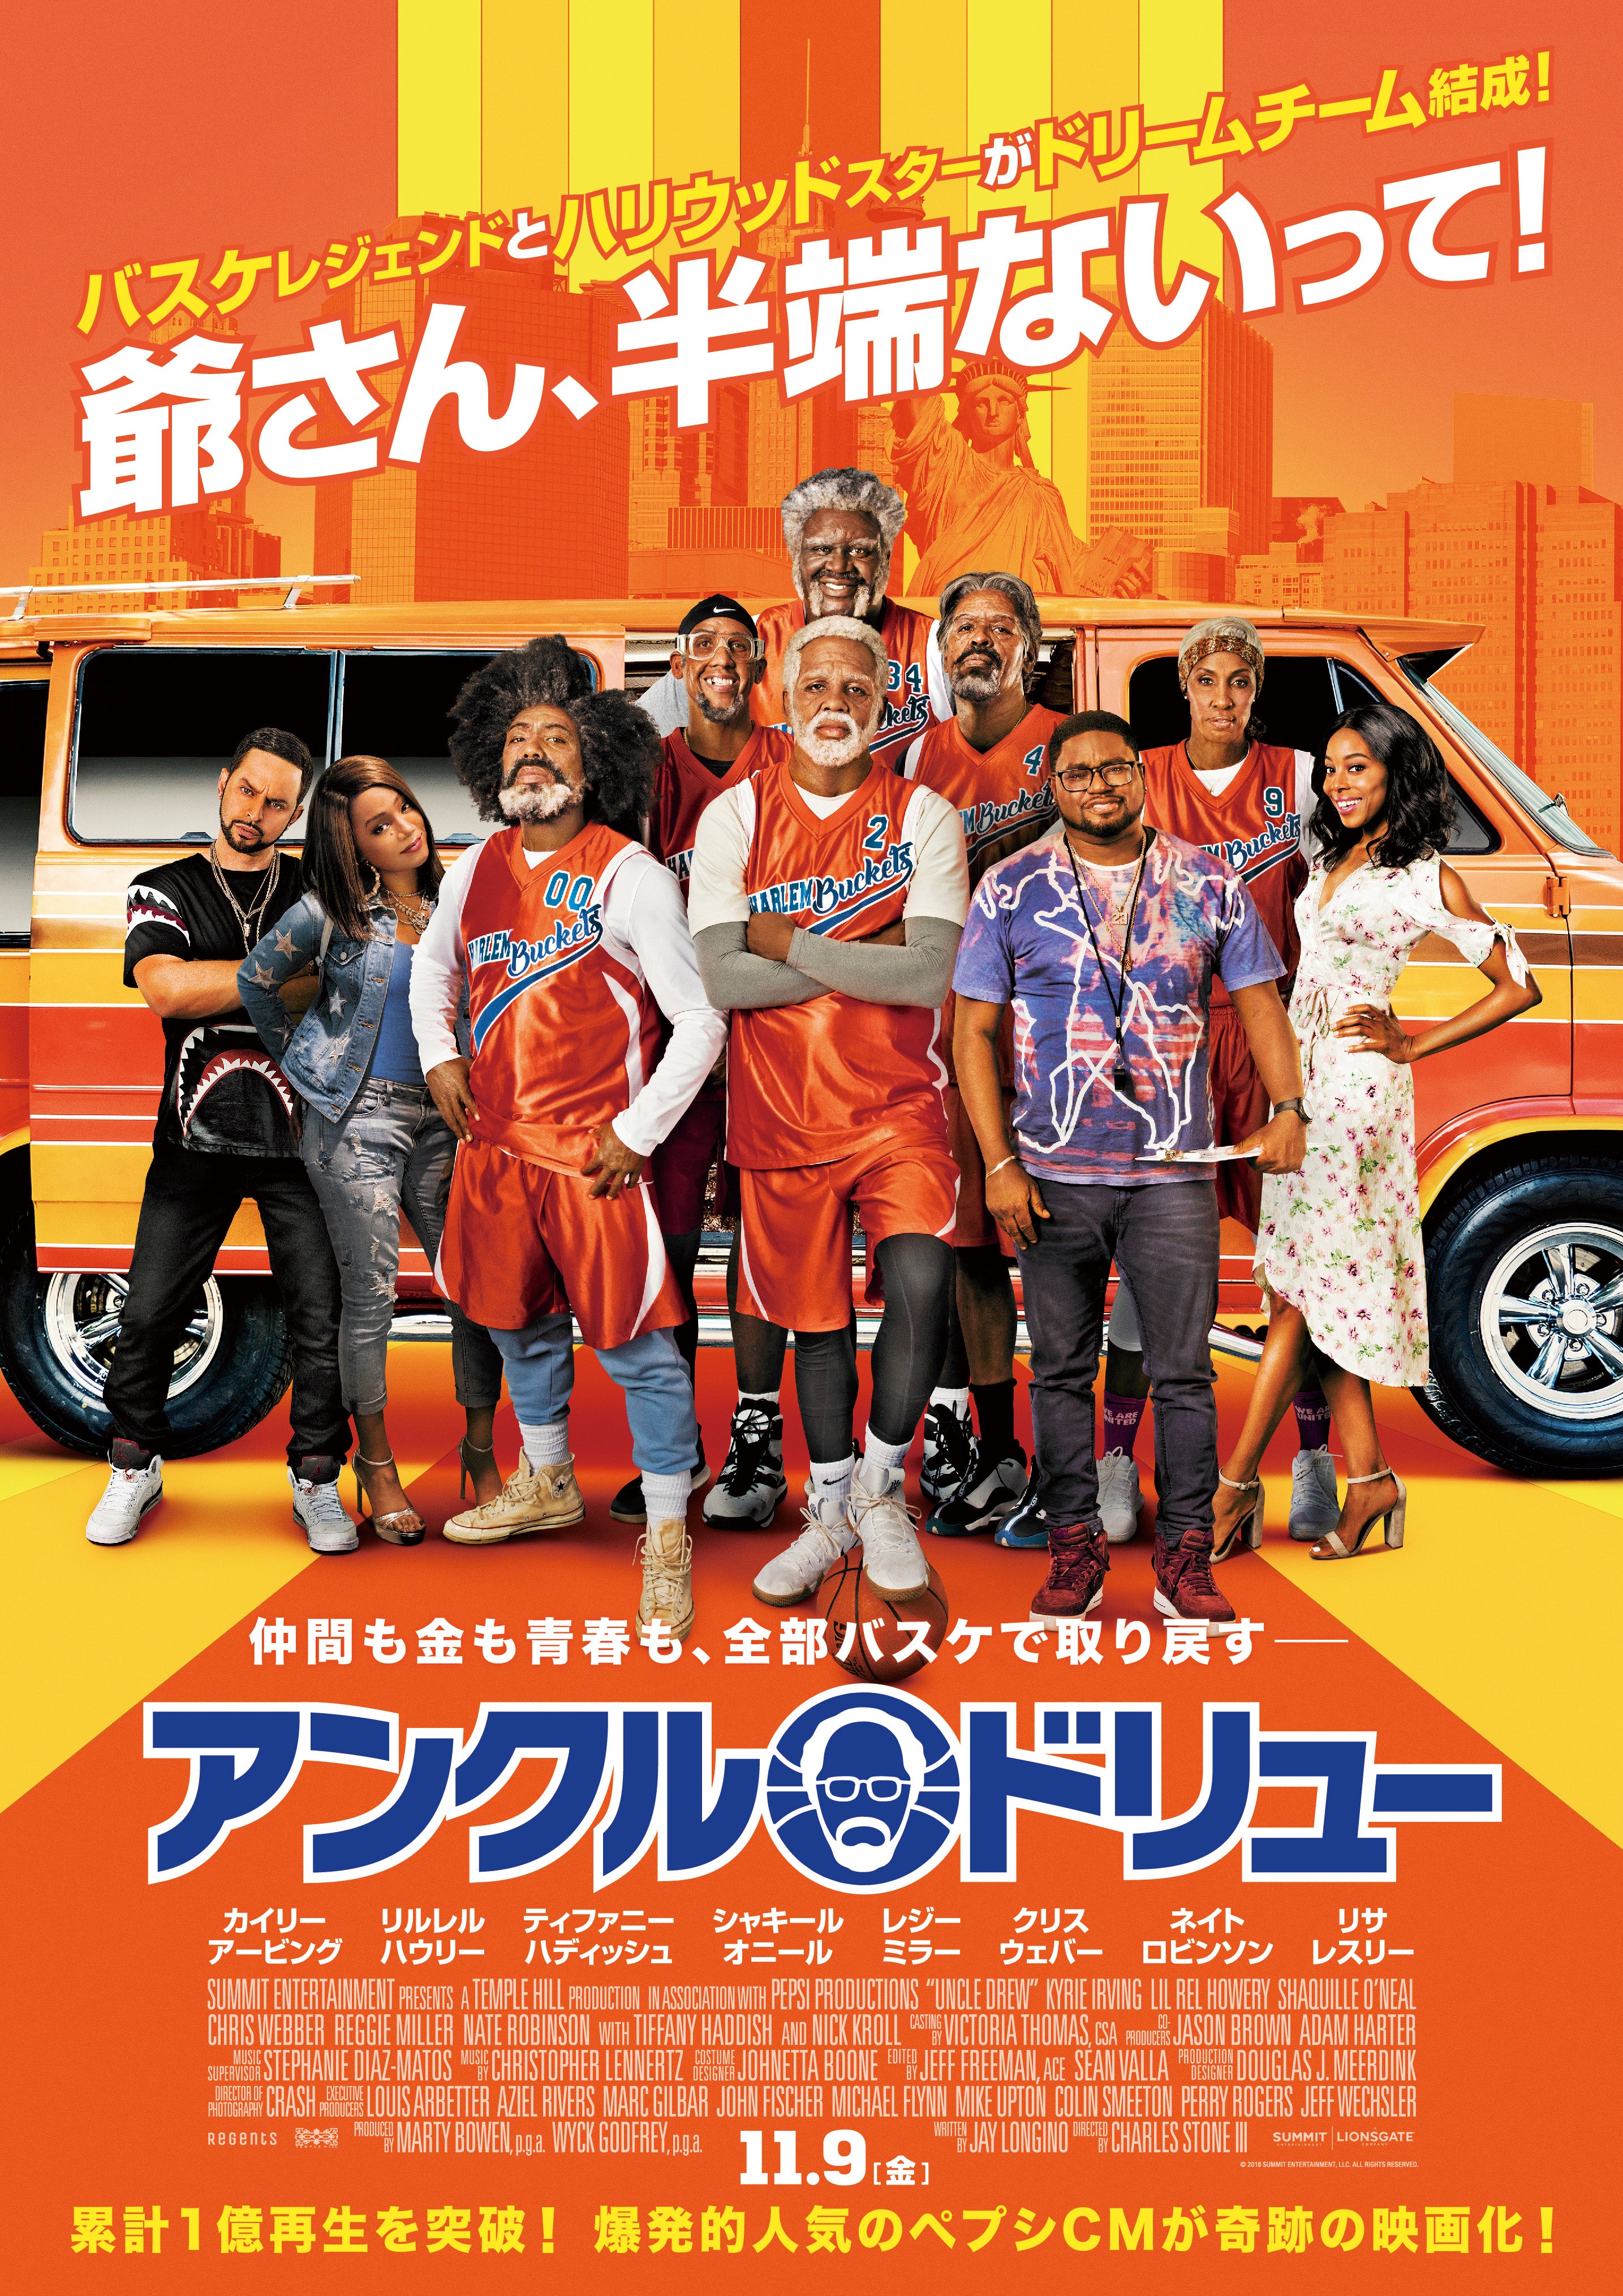 Nba ハリウッド の最強タッグが贈る 話題の青春バスケ映画 アンクル ドリュー 公開記念 スペシャルハロウィンイベント開催決定 サンロッカーズ渋谷